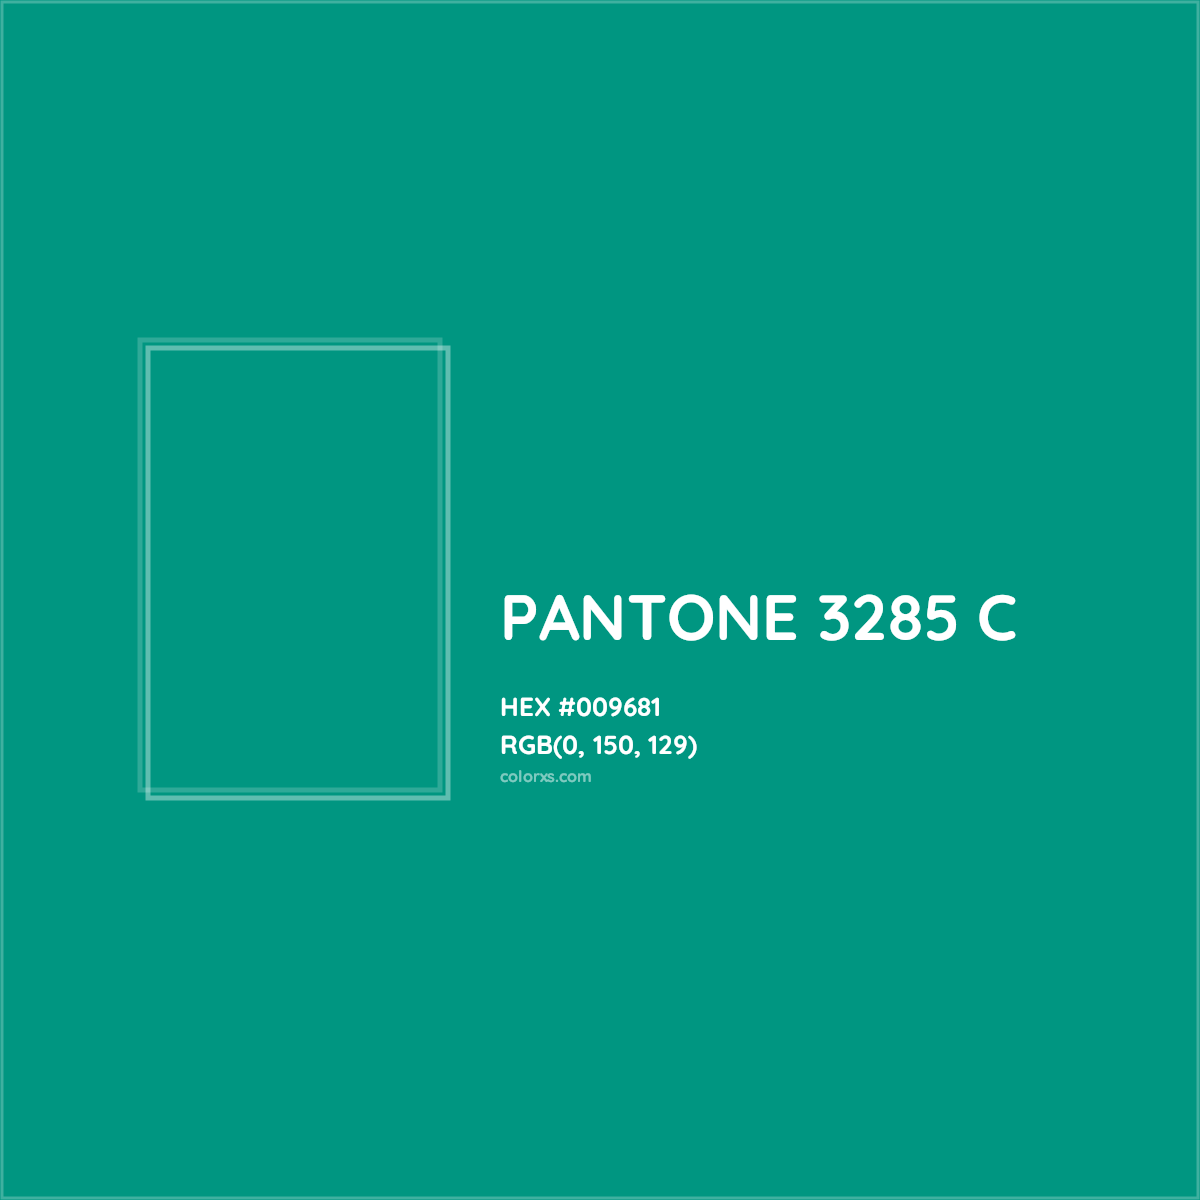 HEX #009681 PANTONE 3285 C CMS Pantone PMS - Color Code